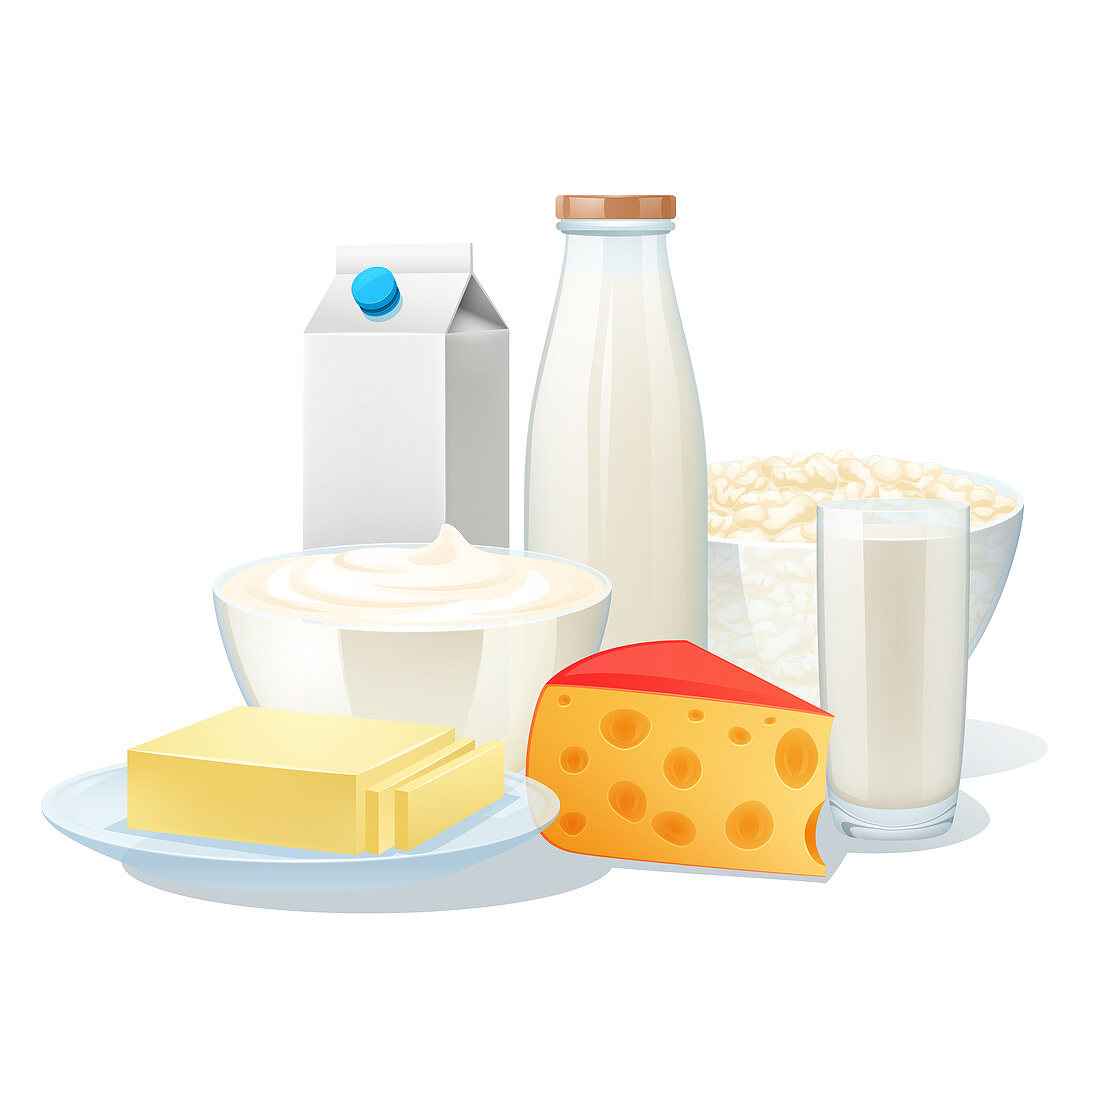 Milk products, illustration